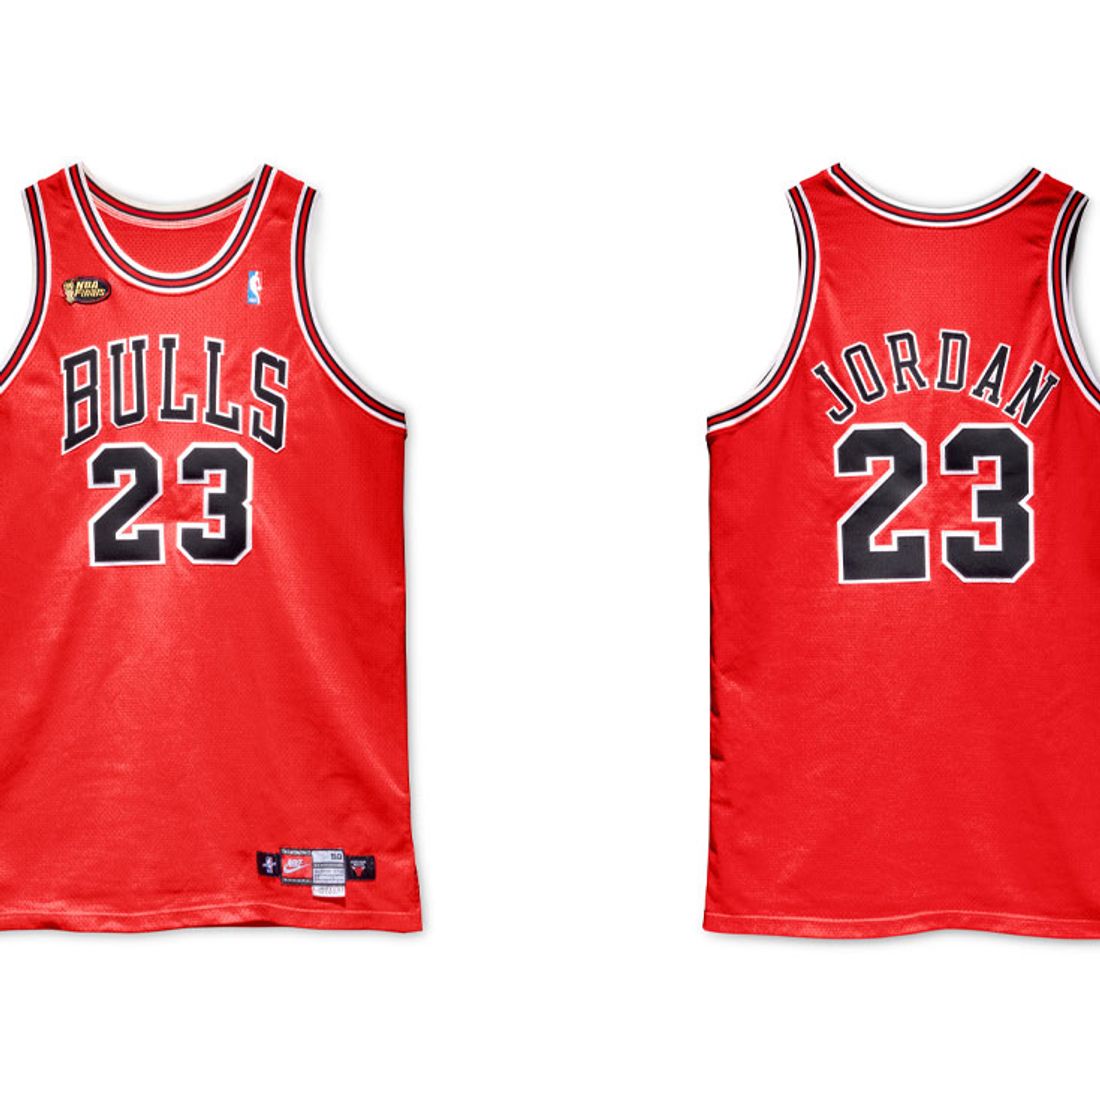 Michael Jordan's Game-Worn Chicago Bulls Jersey From His Final NBA